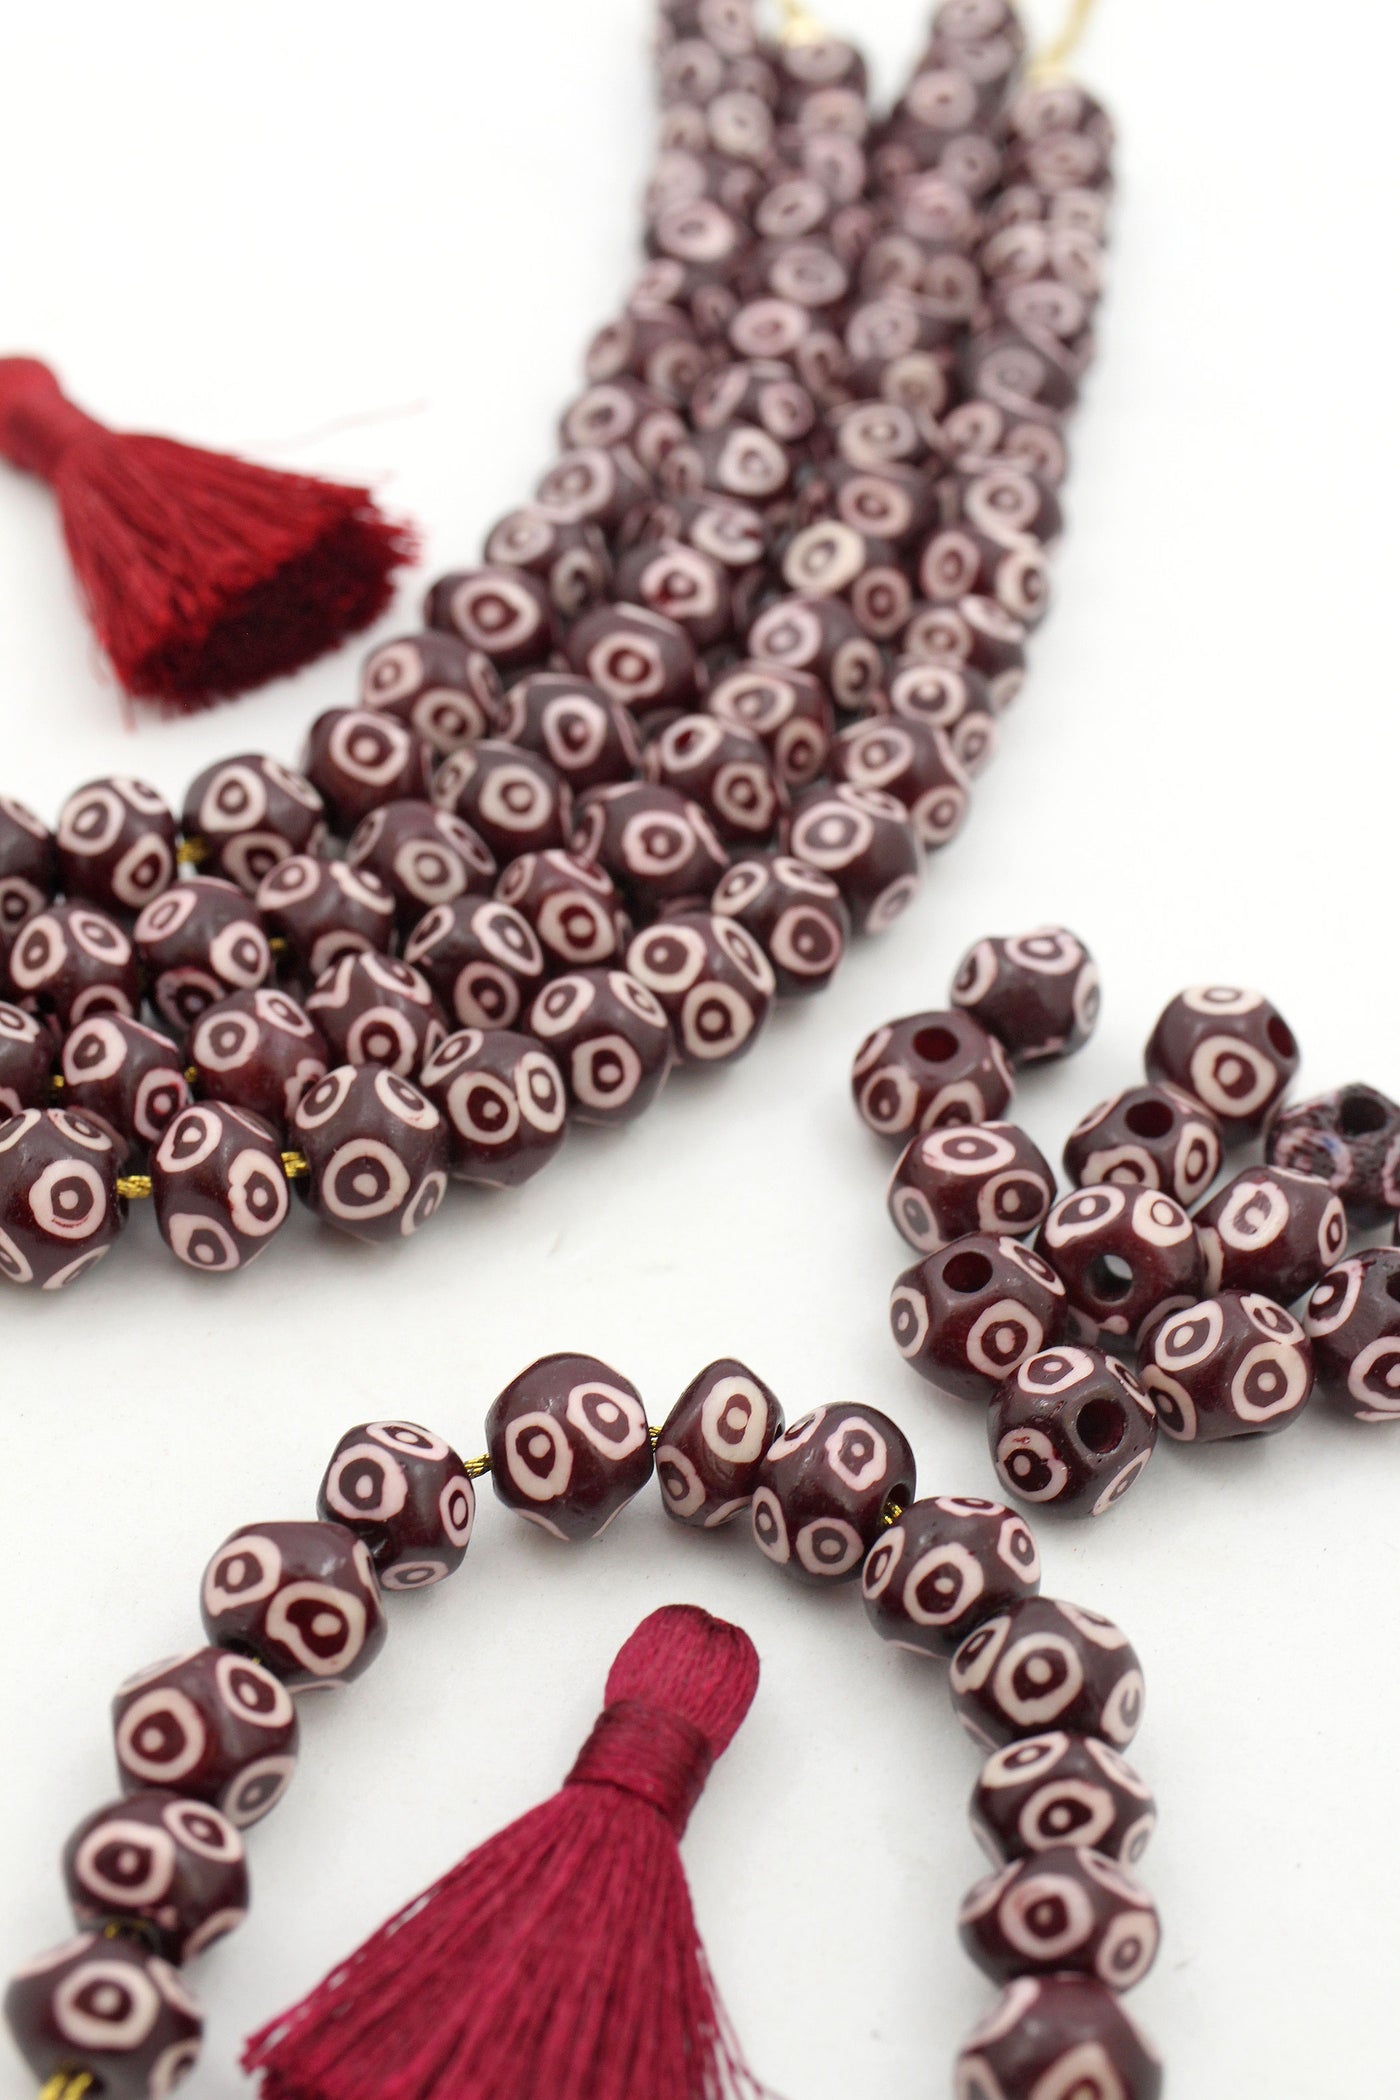 Garnet beads for making January birthstone jewelry 